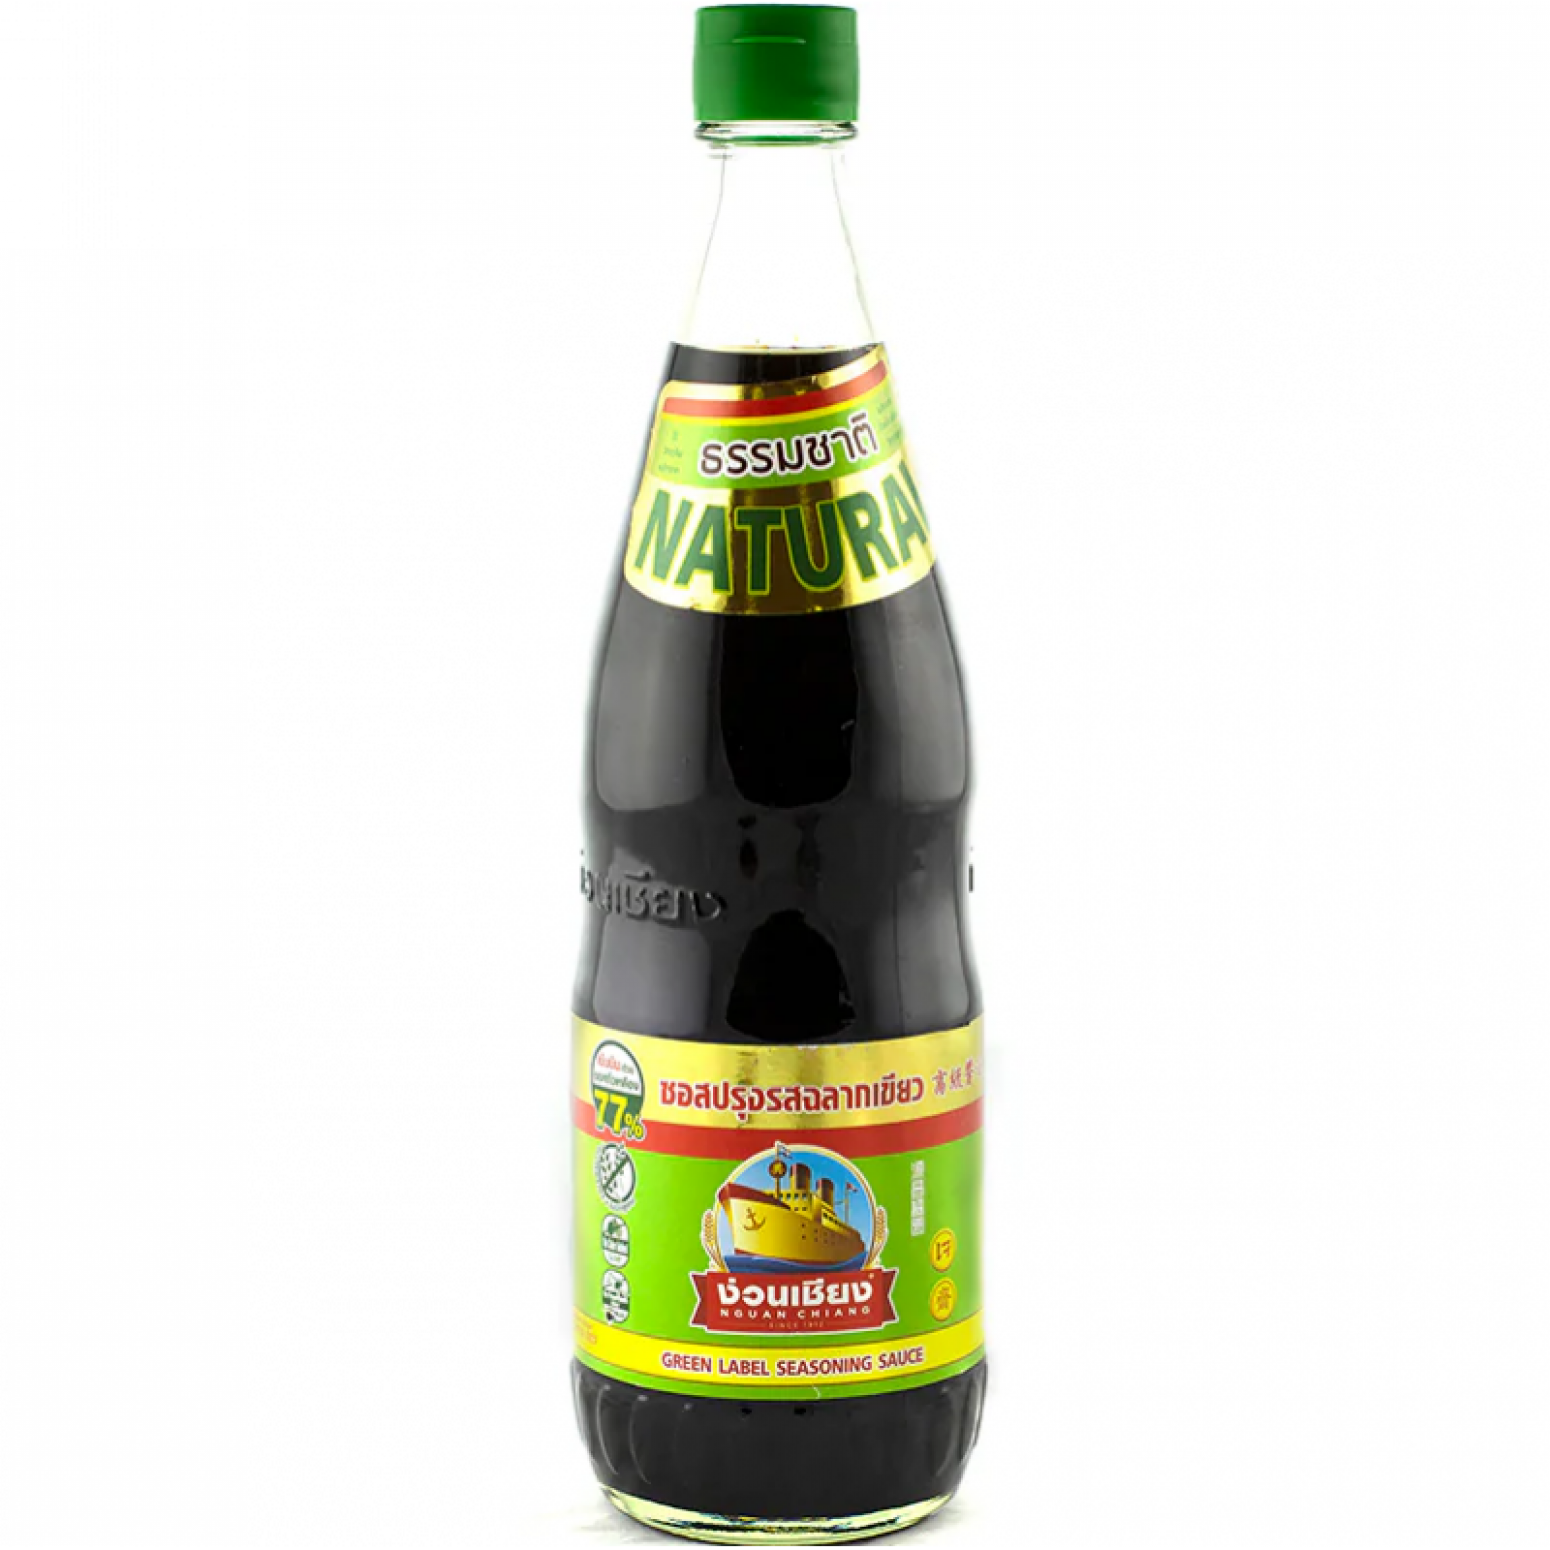 Nguan Chiang Green Label Seasoning Sauce 700cc.